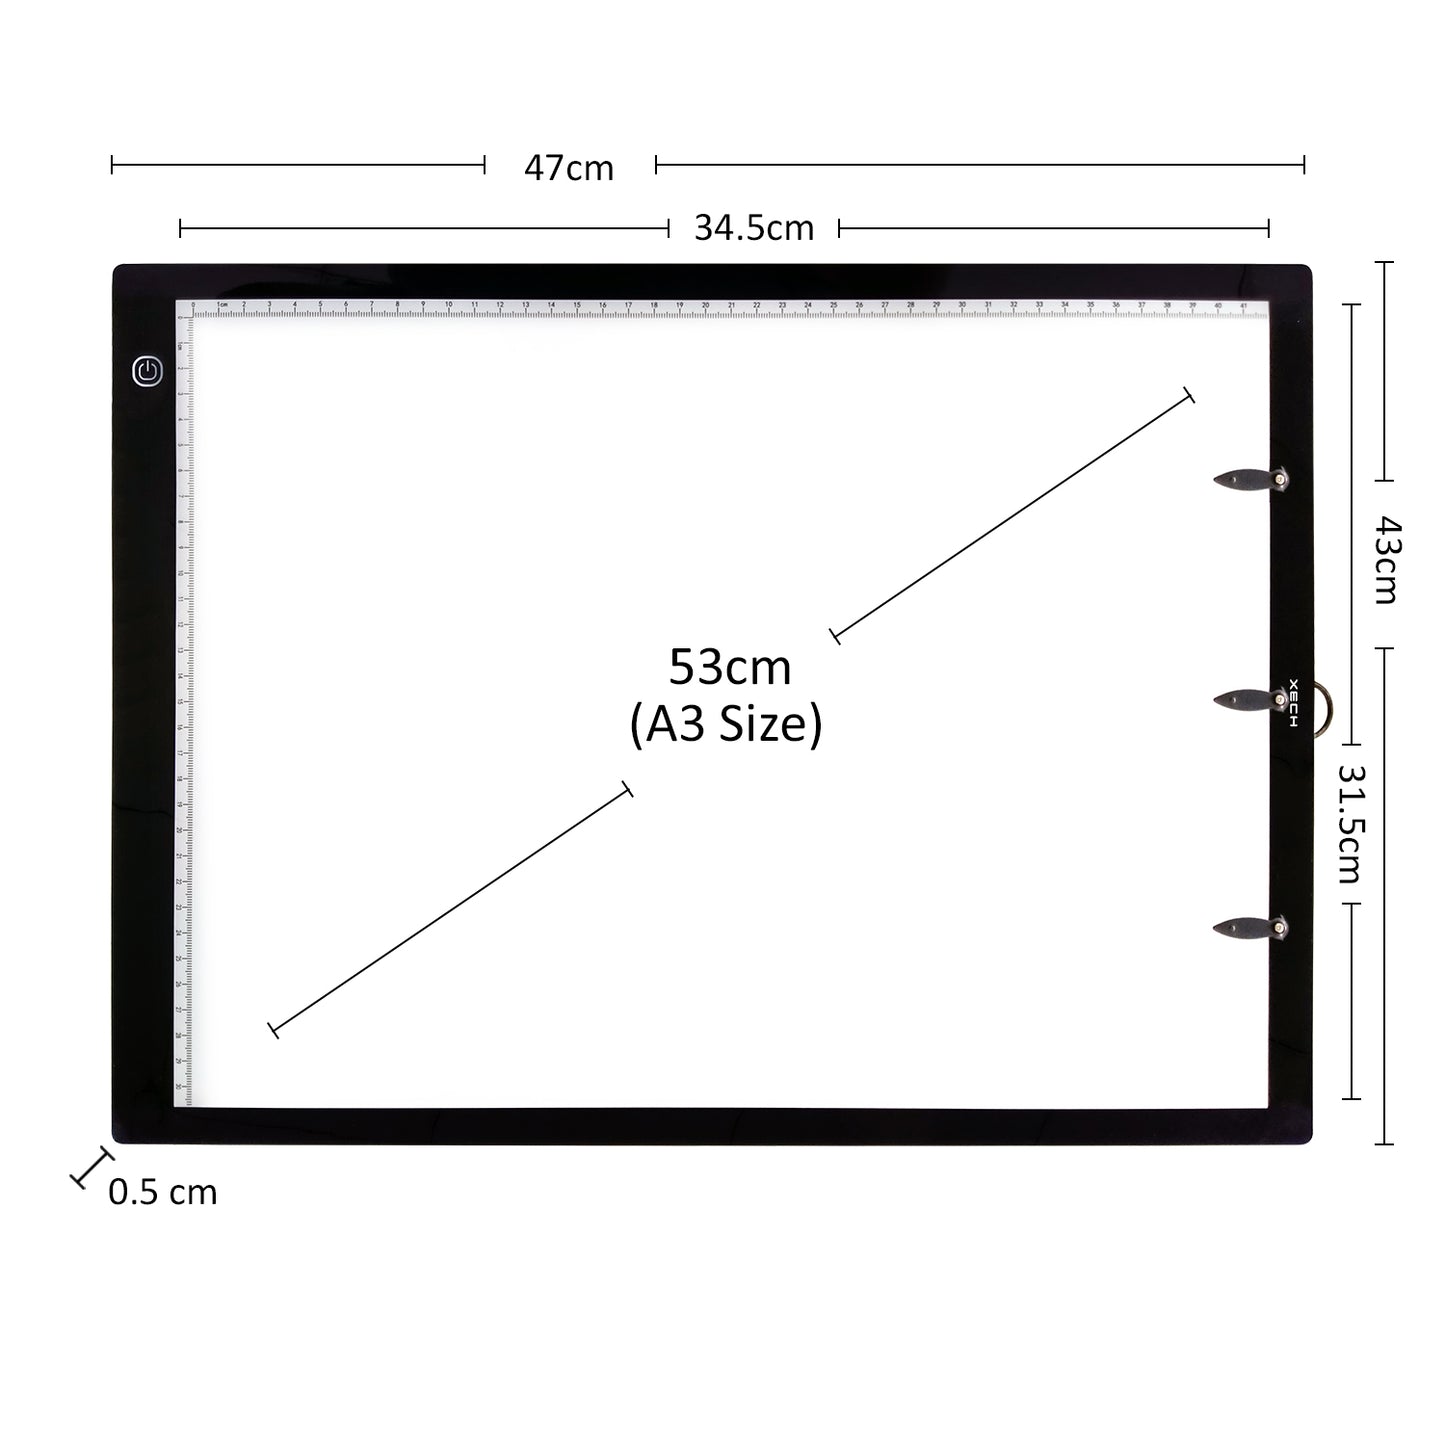 XECH X-Board X-Ray Viewer A4 Size - XECH